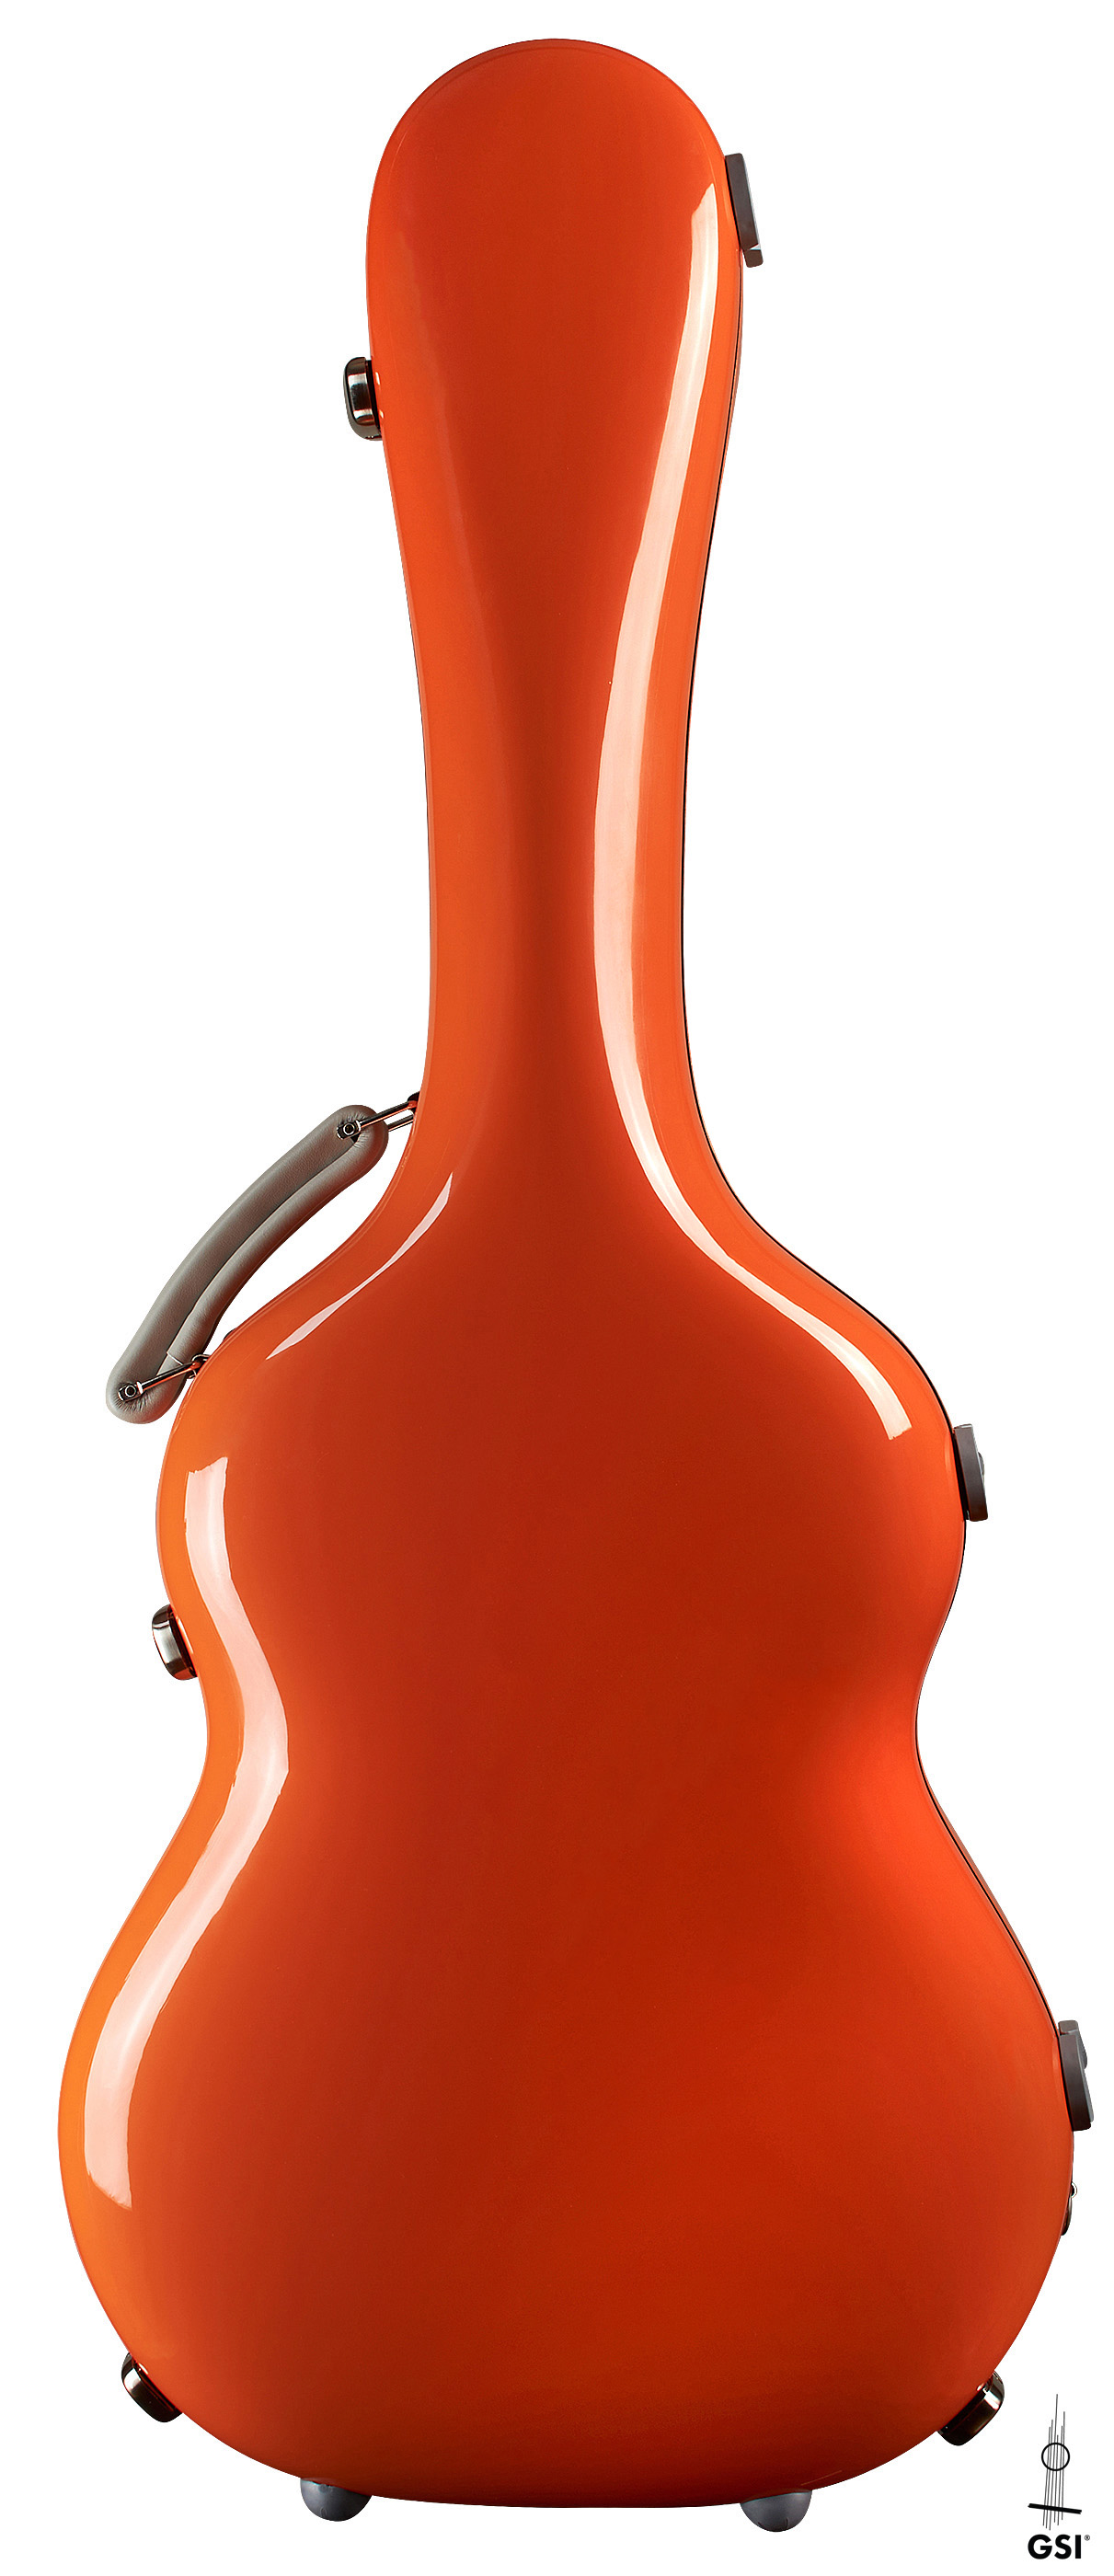 “Luthier Series Carbon Case” by Leona Cases - Orange